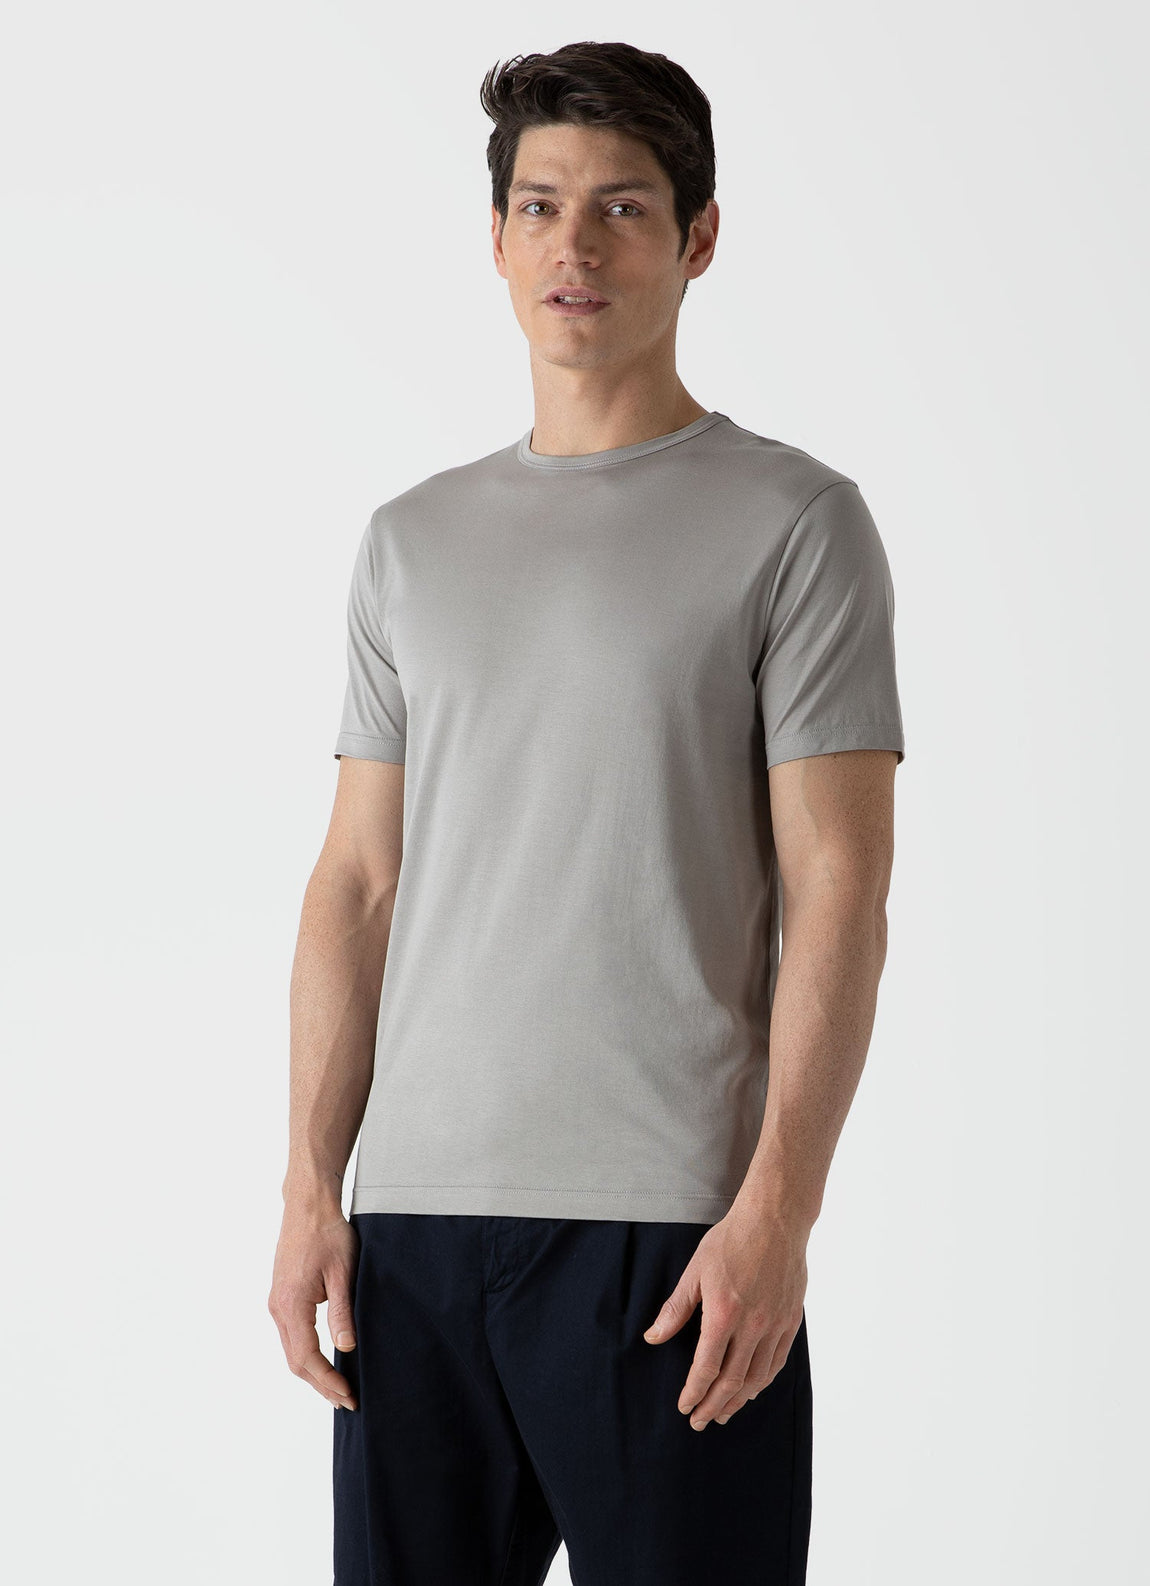 Men's Classic T-shirt in Mid Grey